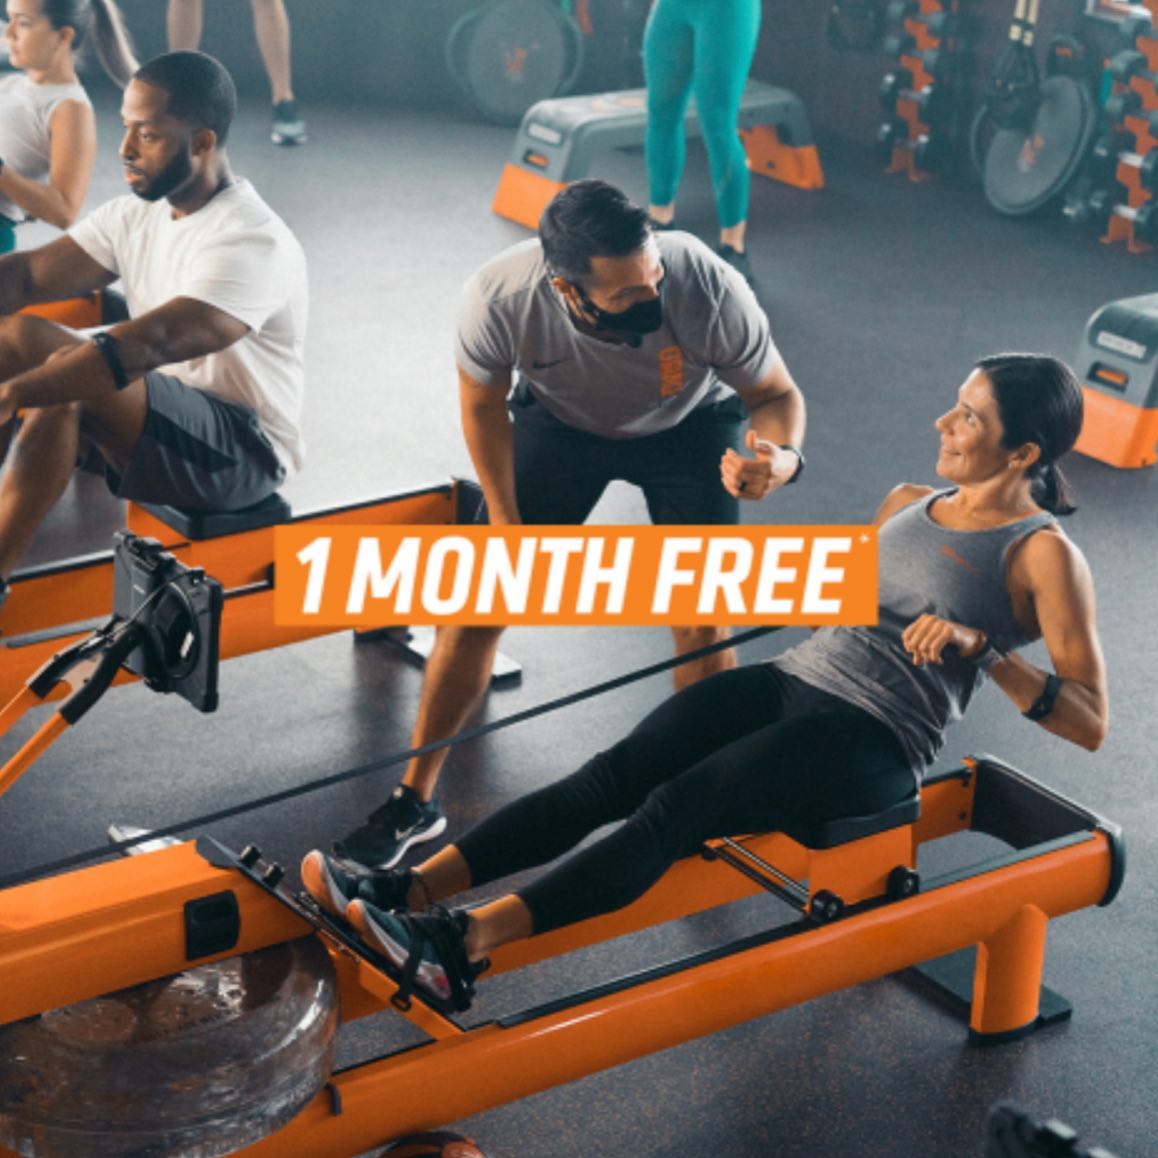 One Month FREE at Orangetheory Fitness